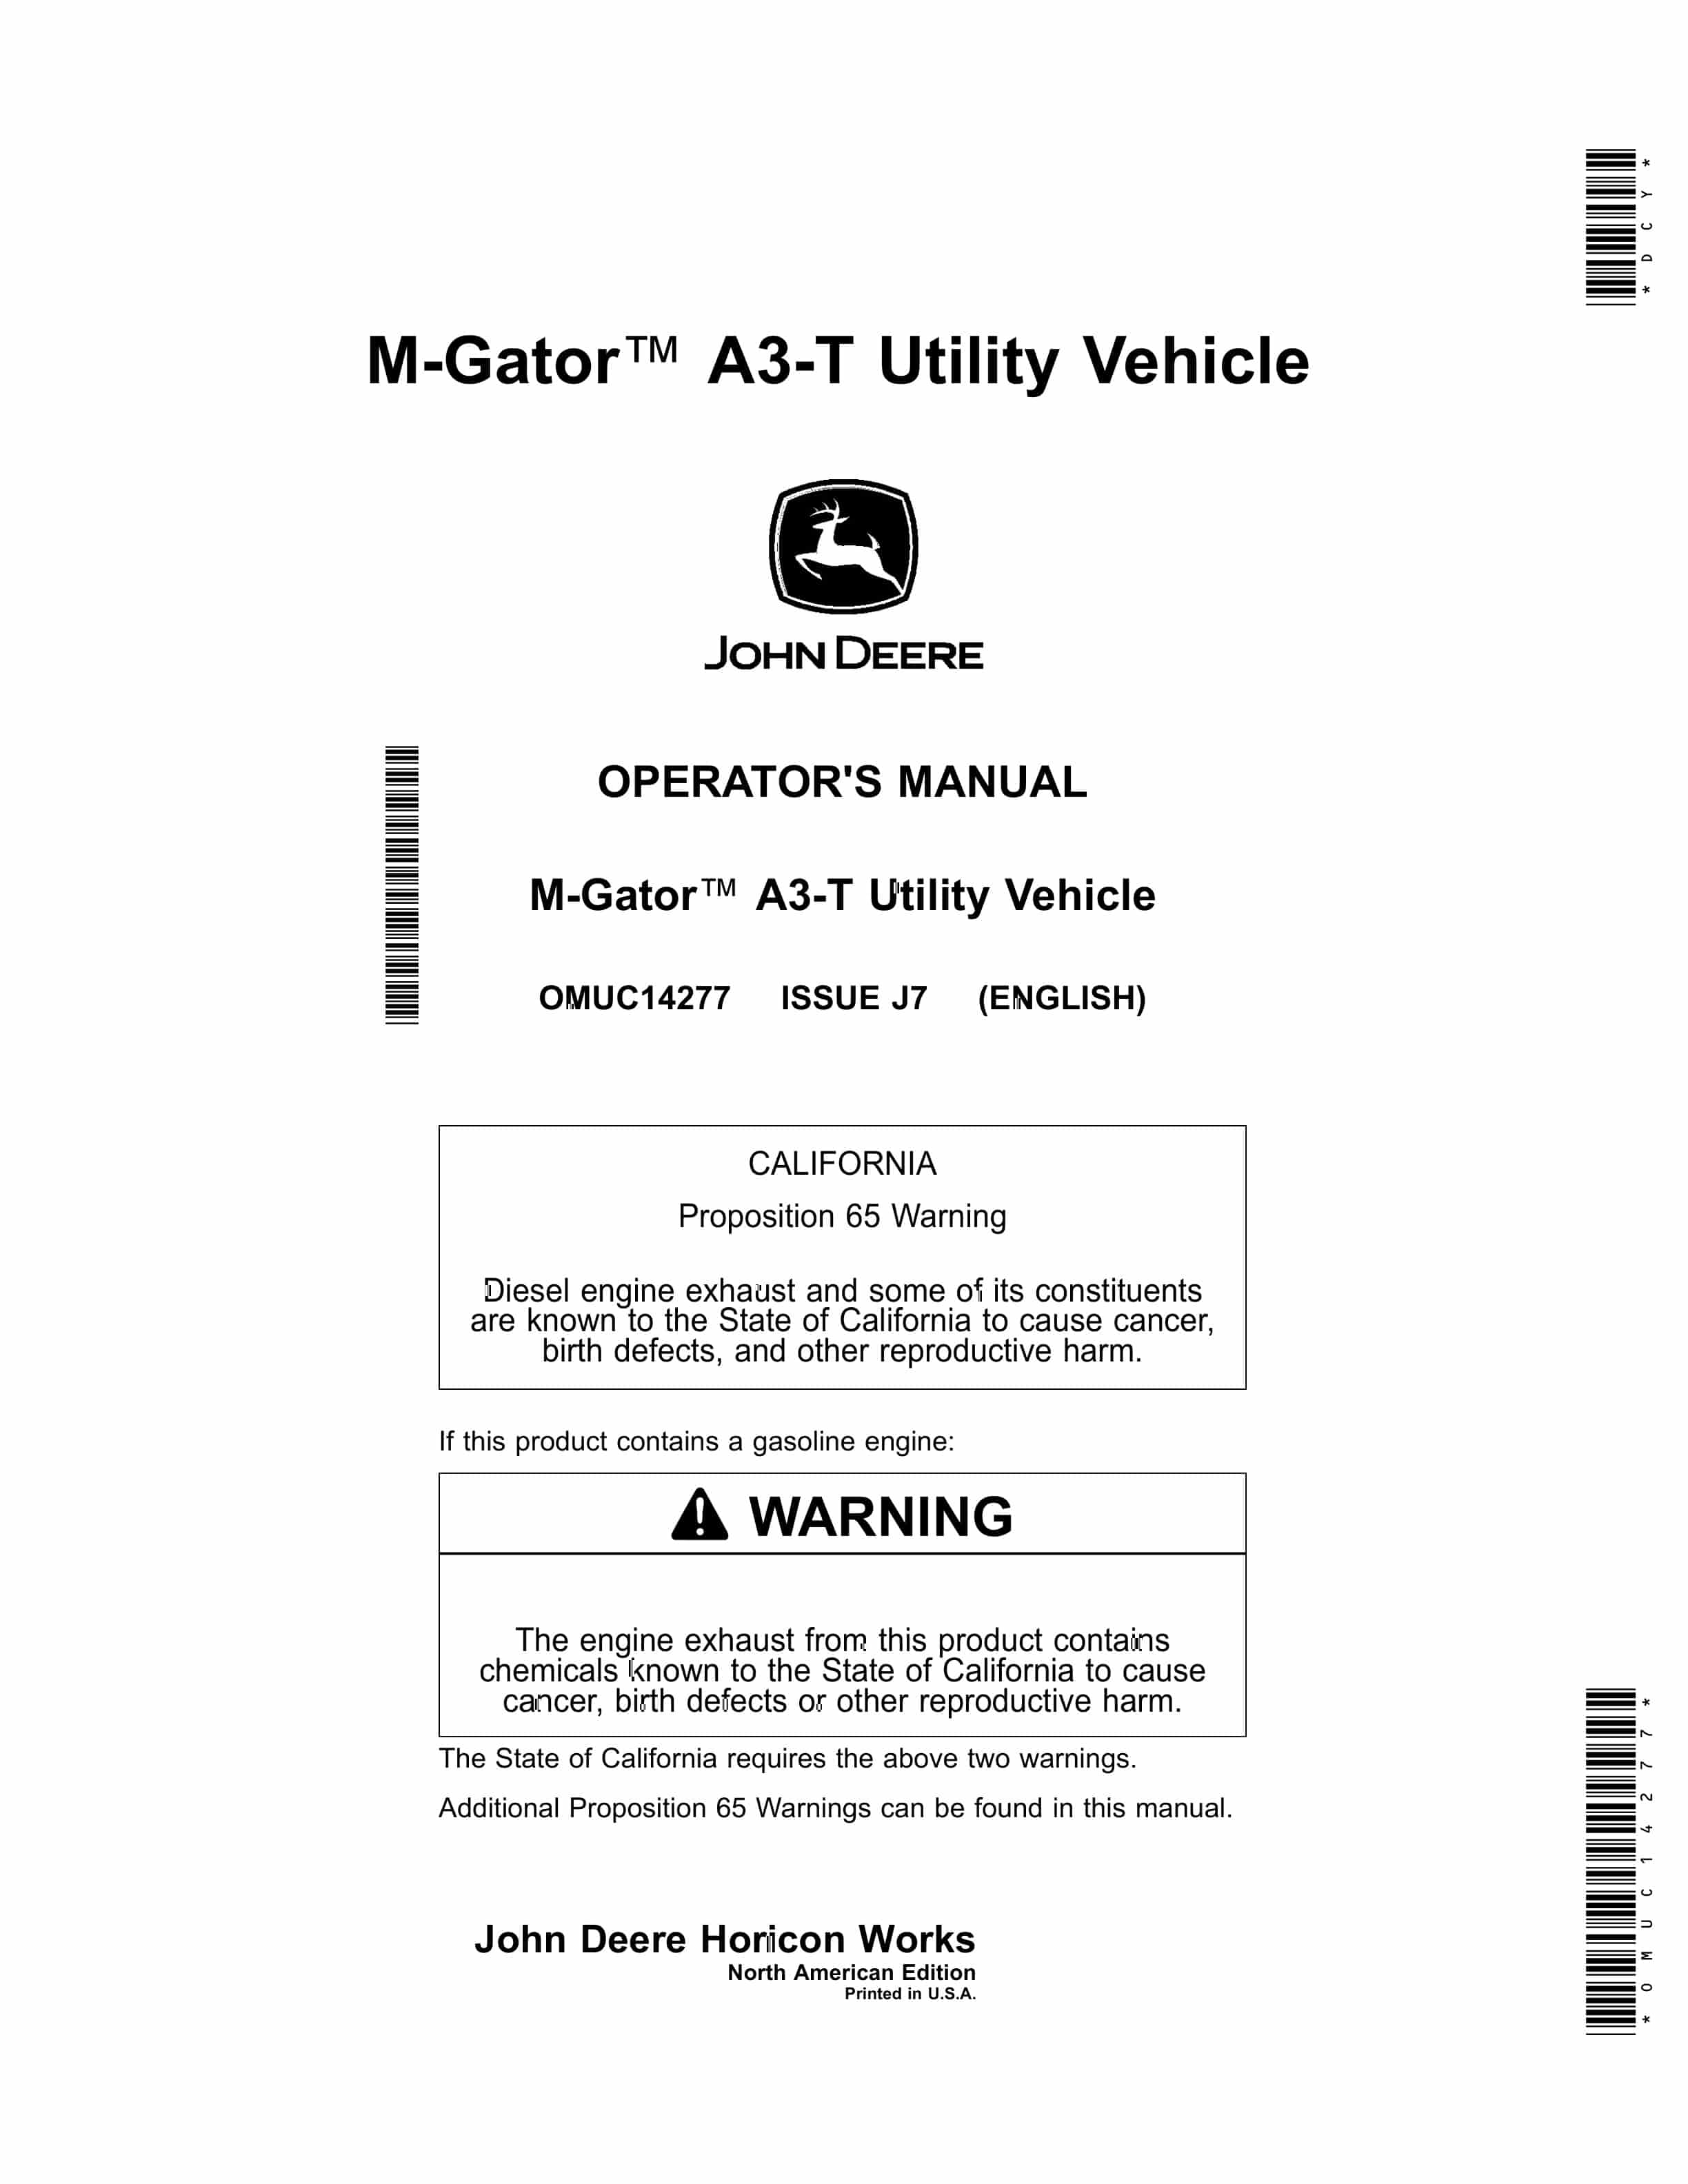 John Deere A3 T M Gator Utility Vehicles Operator Manual OMUC14277 1